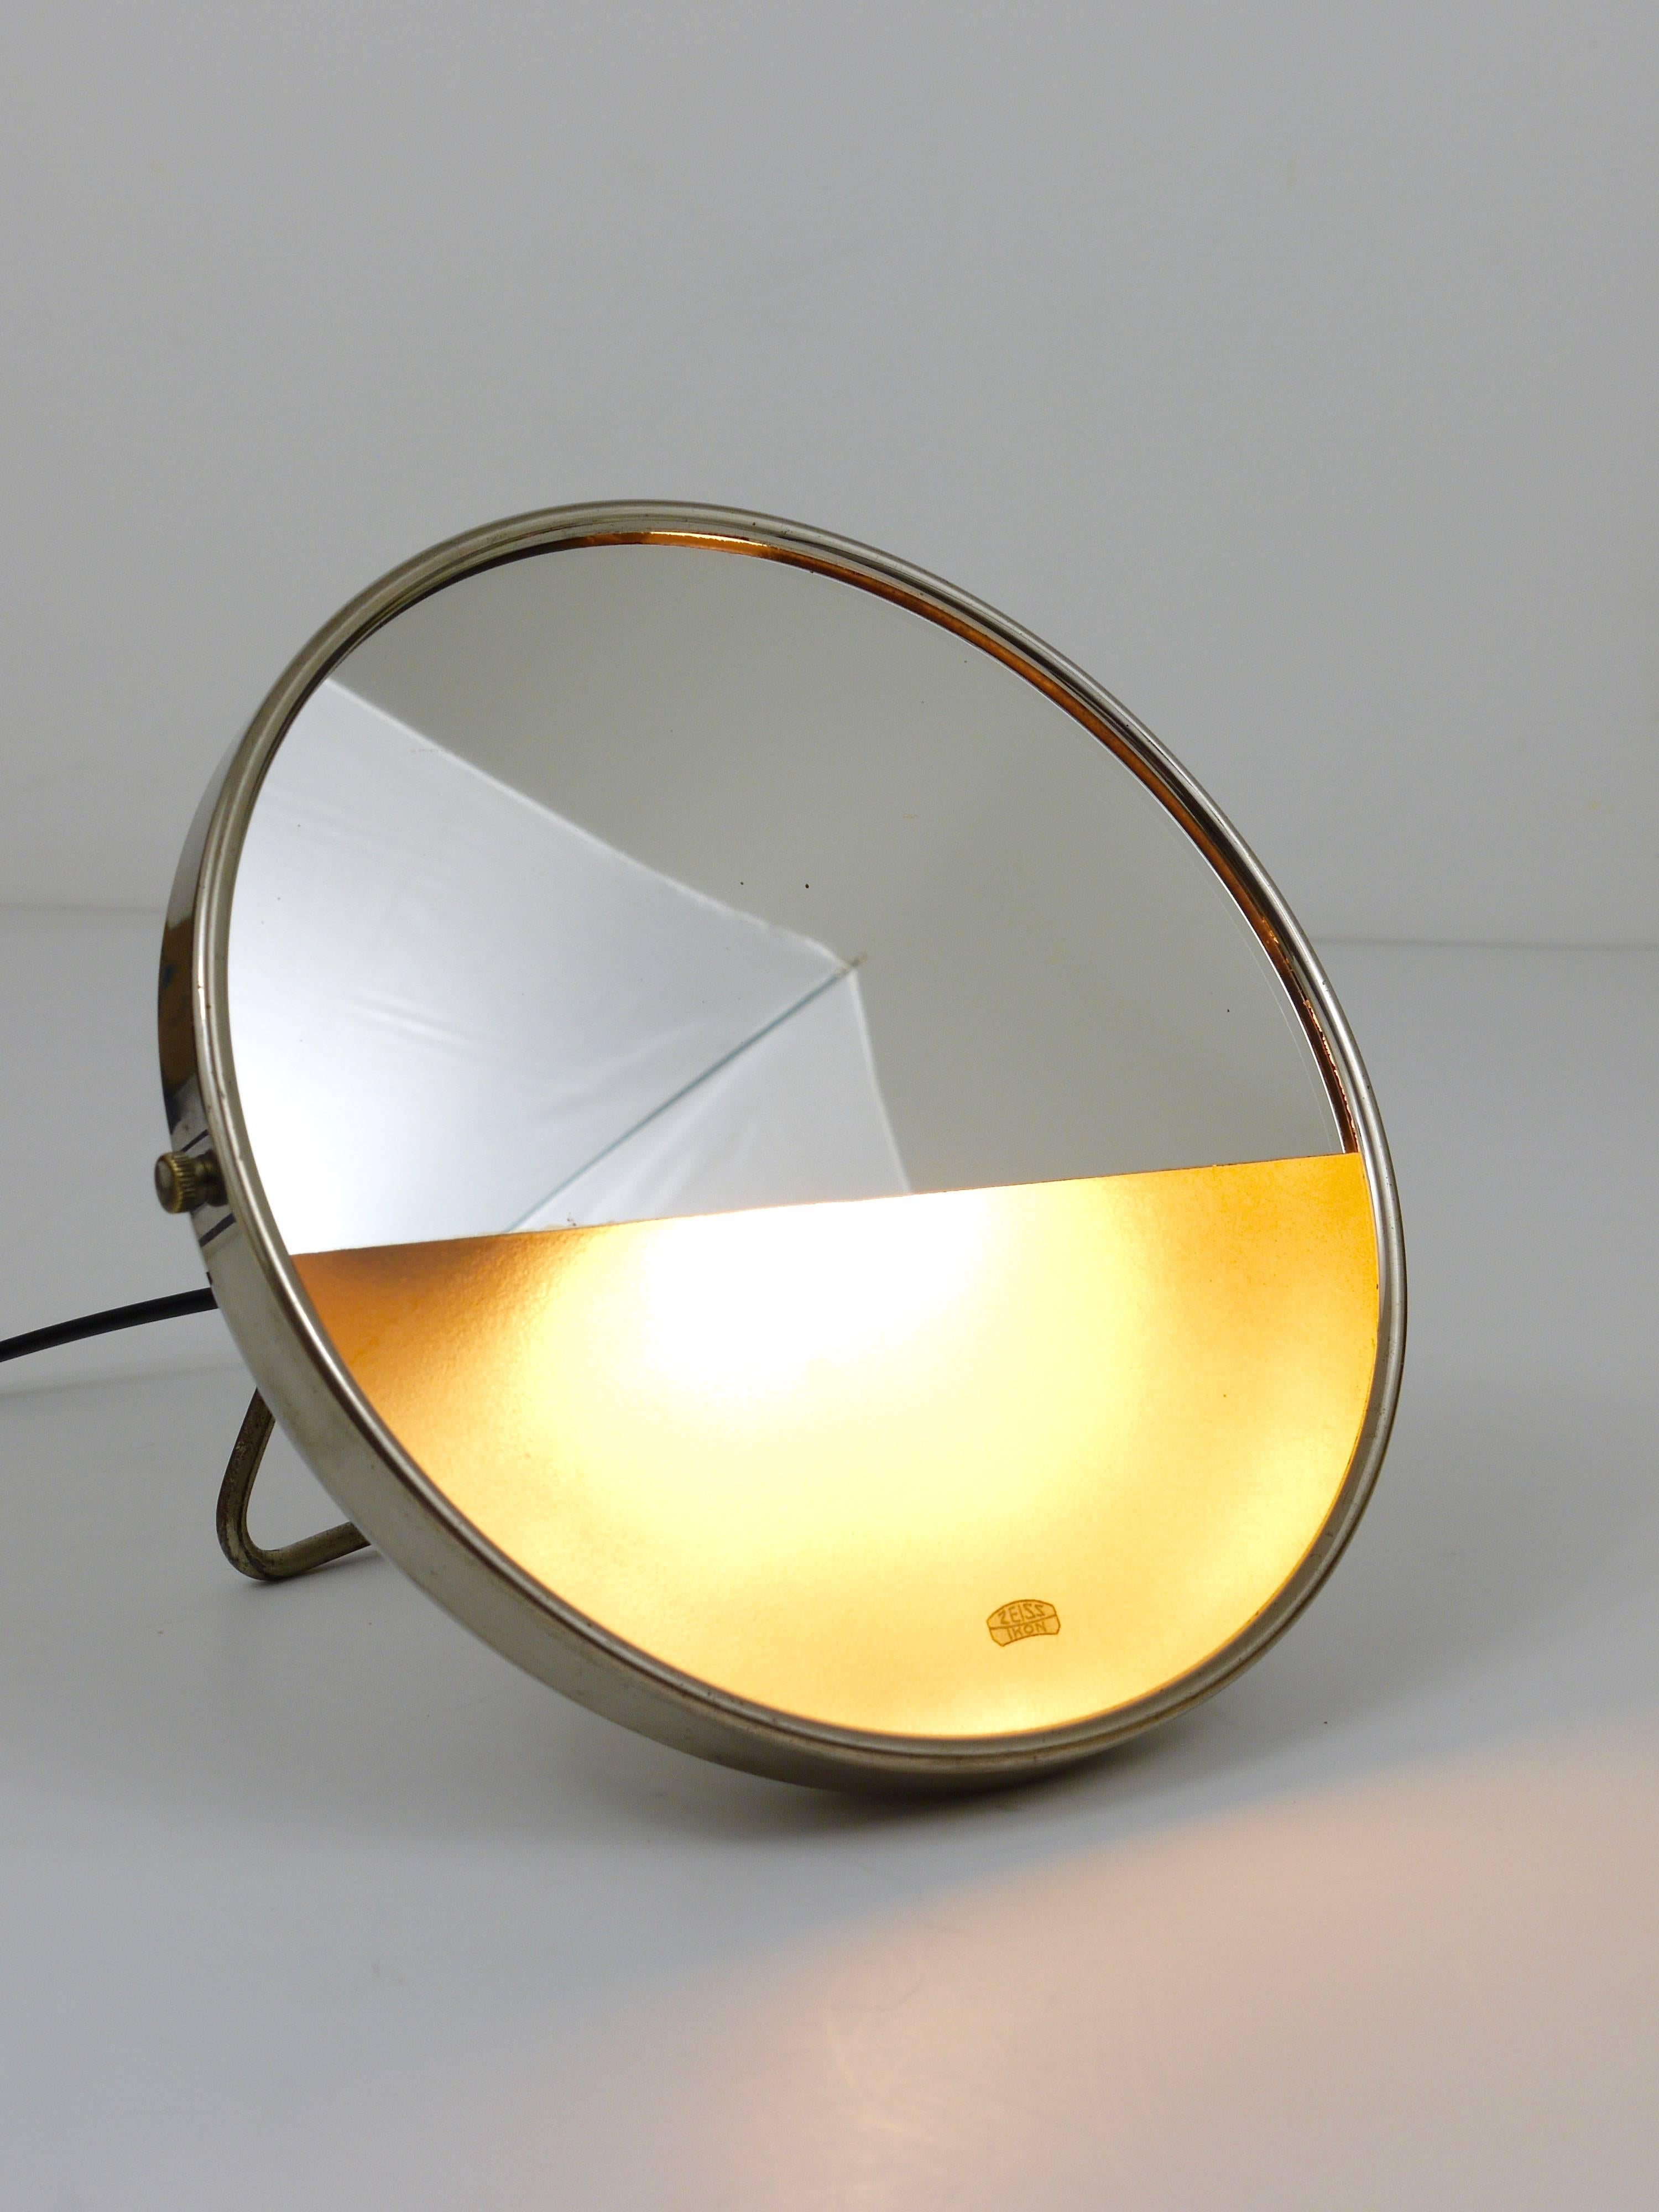 German Illuminated Shaving or Vanity Mirror by Marcel Breuer, Bauhaus for Zeiss Ikon